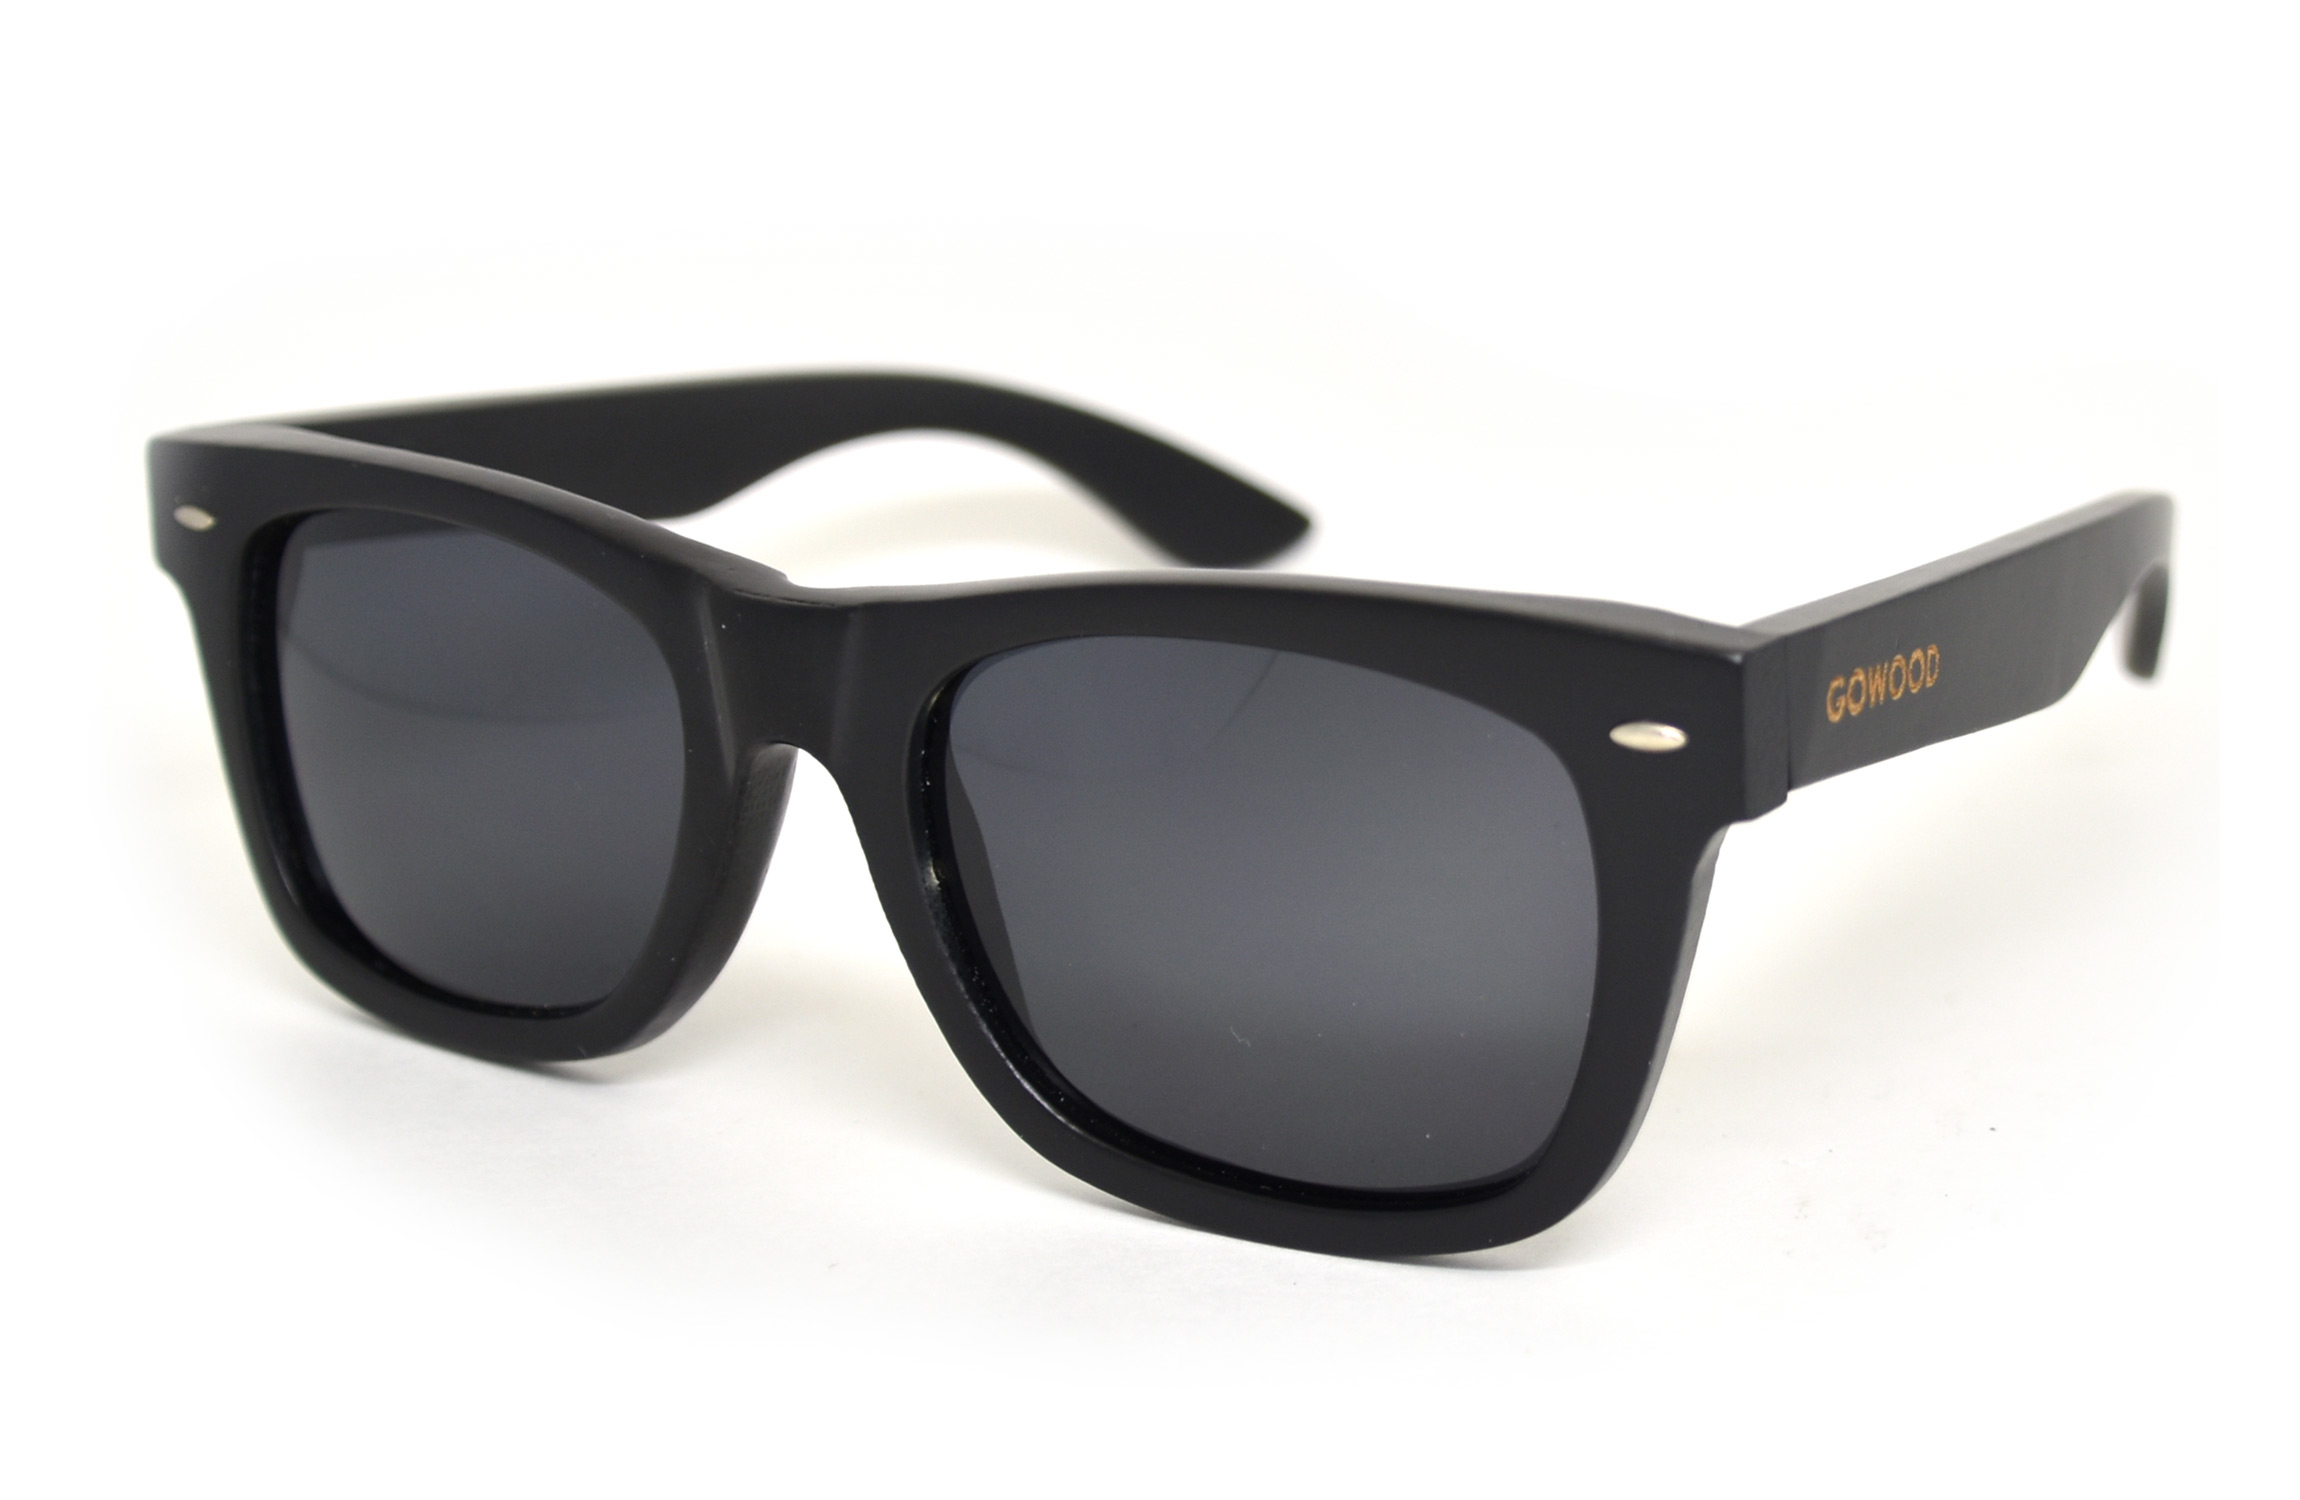 wayfarer style sunglasses black angle